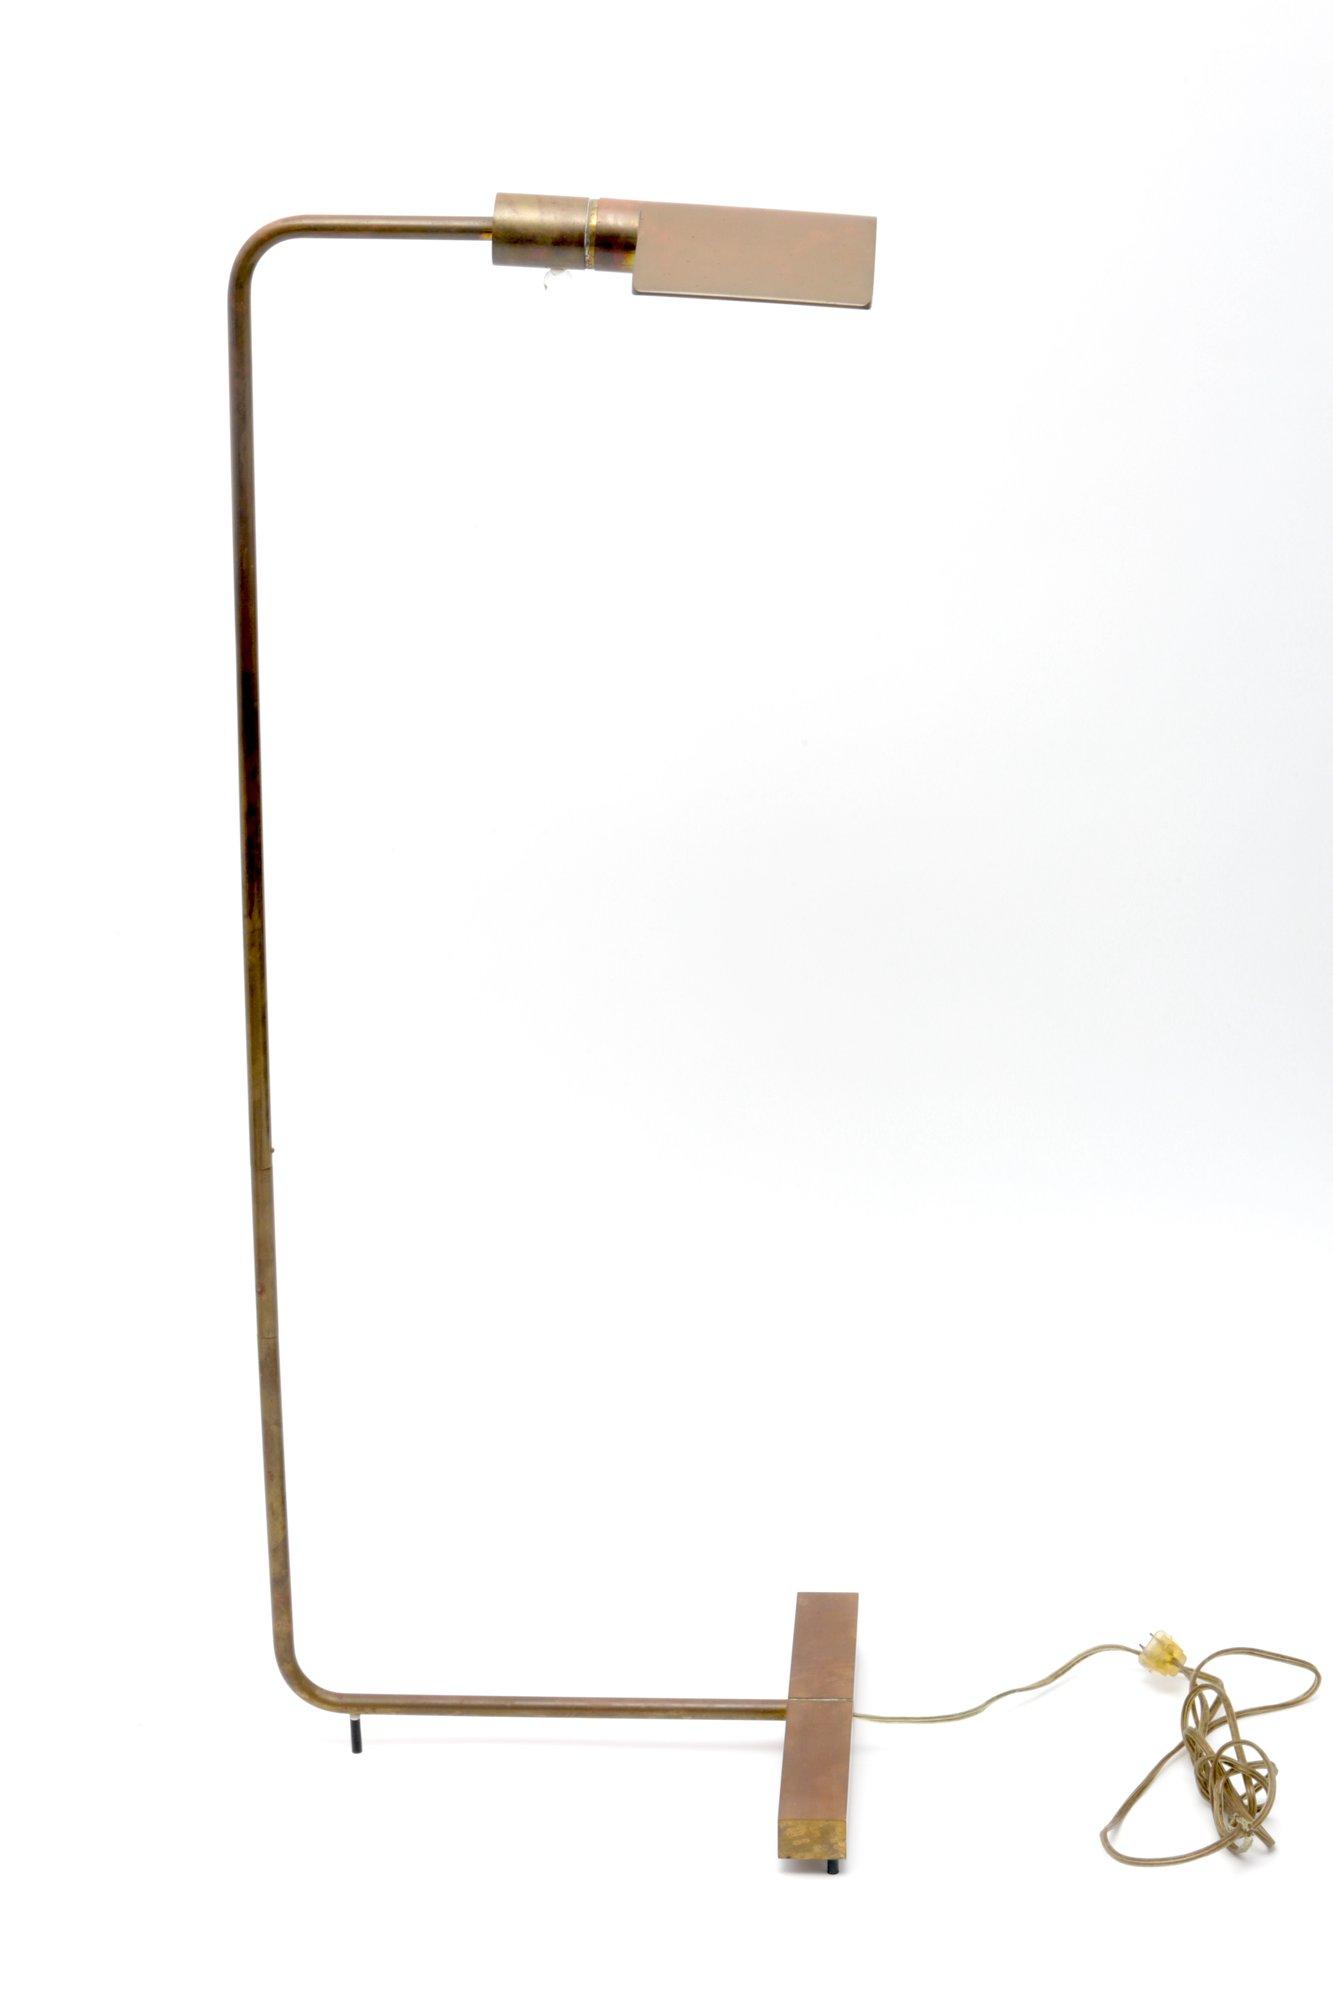 Cedric Hartman Brass Mid-Century Modern Floor Swivel Lamp